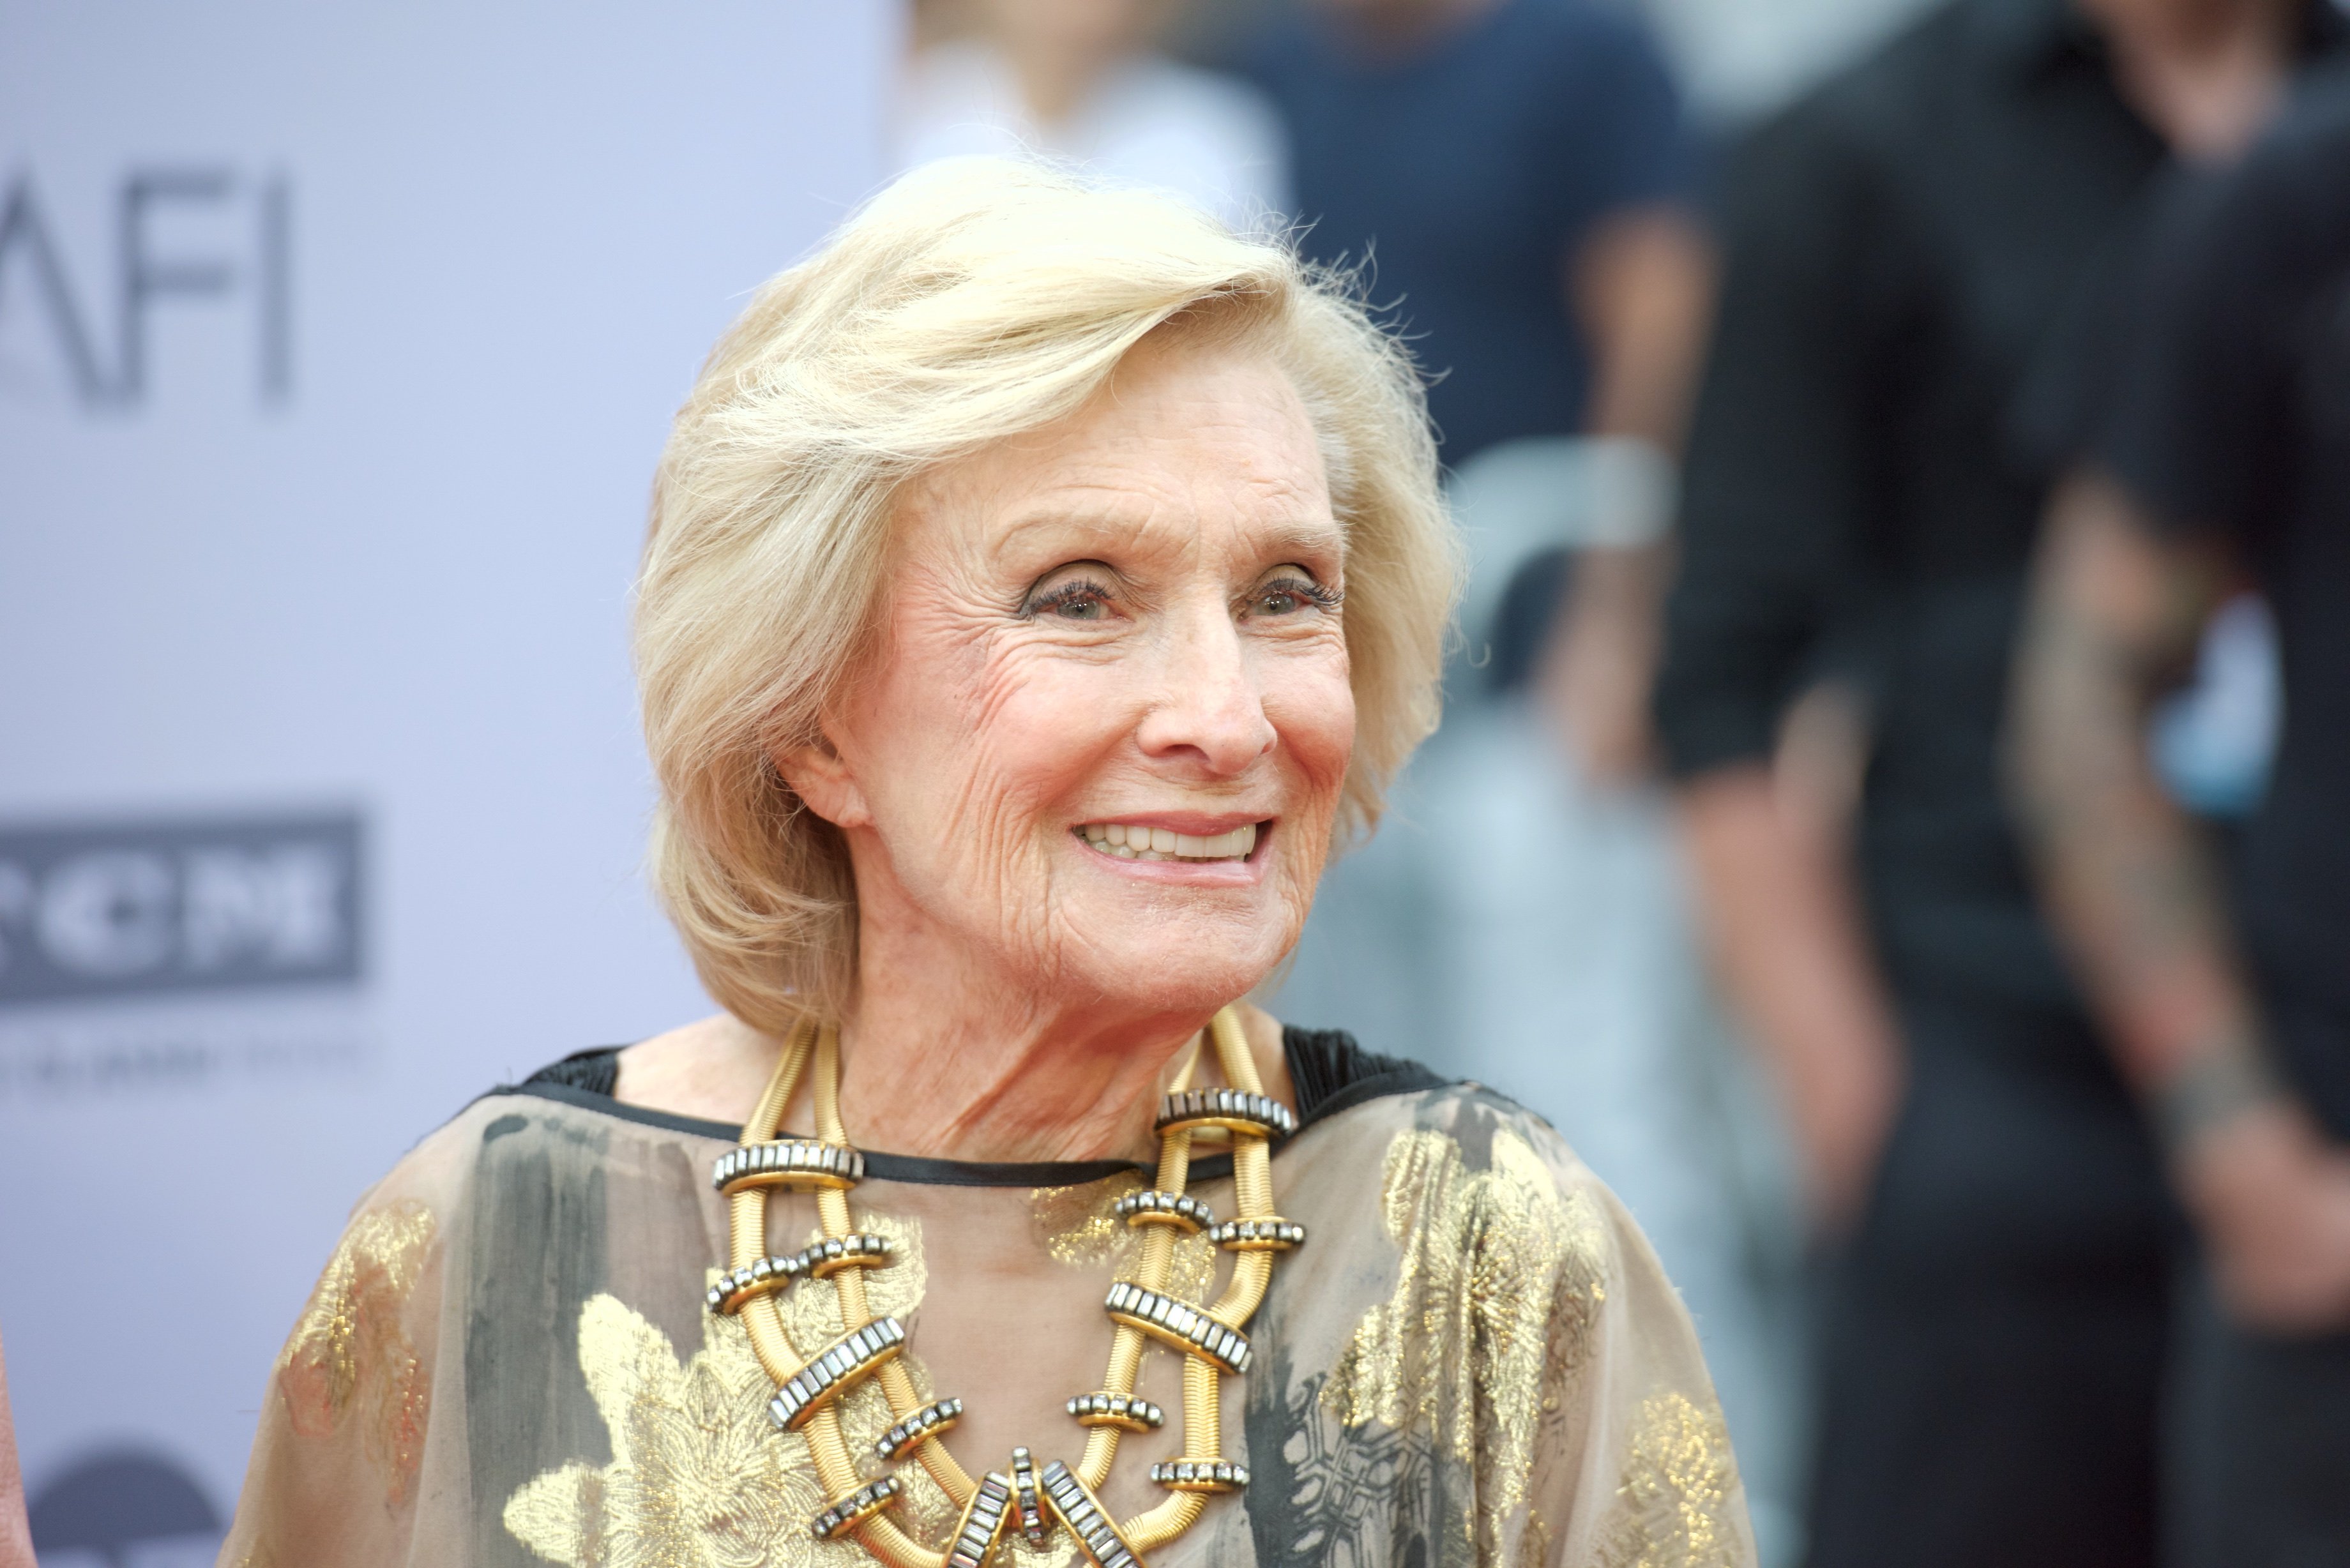 Cloris Leachman besucht die 44. AFI Life Achievement Awards Gala Tribute to John Williams im Dolby Theatre am 9. Juni 2016 in Hollywood, Kalifornien. | Quelle: Getty Images